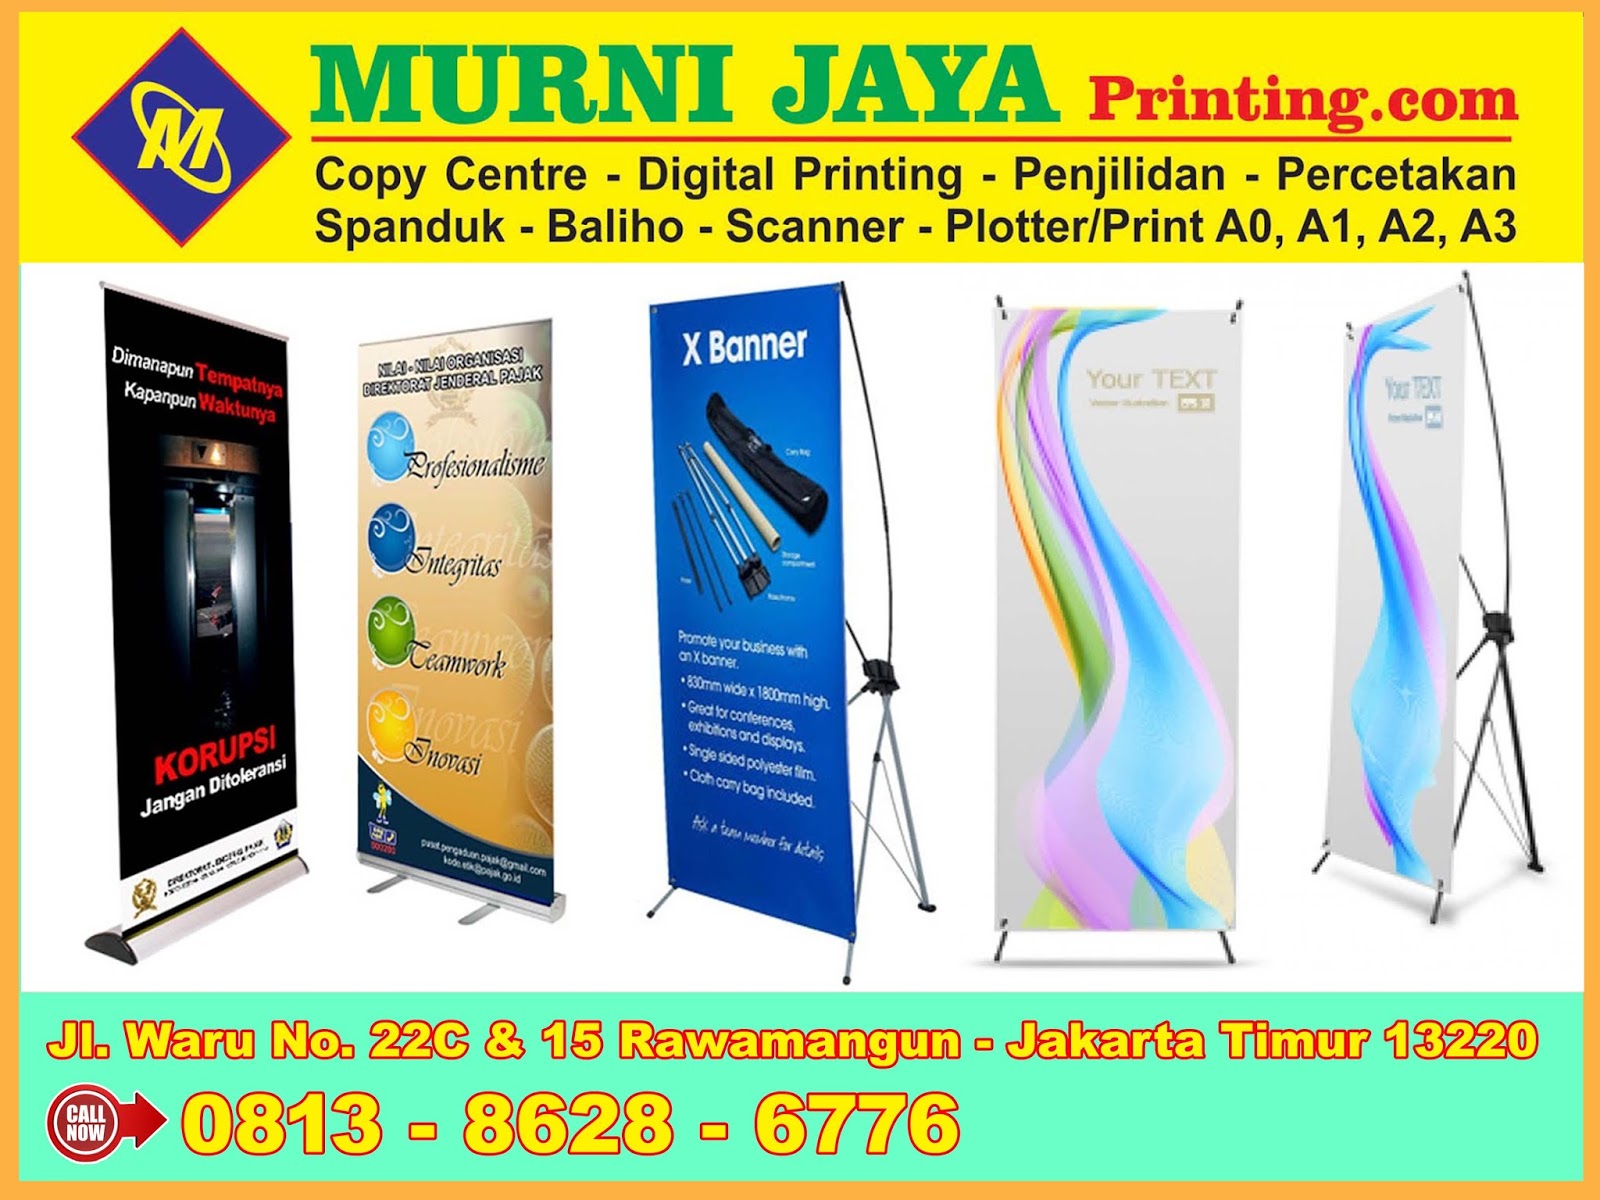 Murni Jaya Printing Jasa Fotocopy Penjilidan Cetak Spanduk Murah 24 Jam Di Jakarta Cetak X Banner Murah Dan Berkualitas 24 Jam Di Jakarta